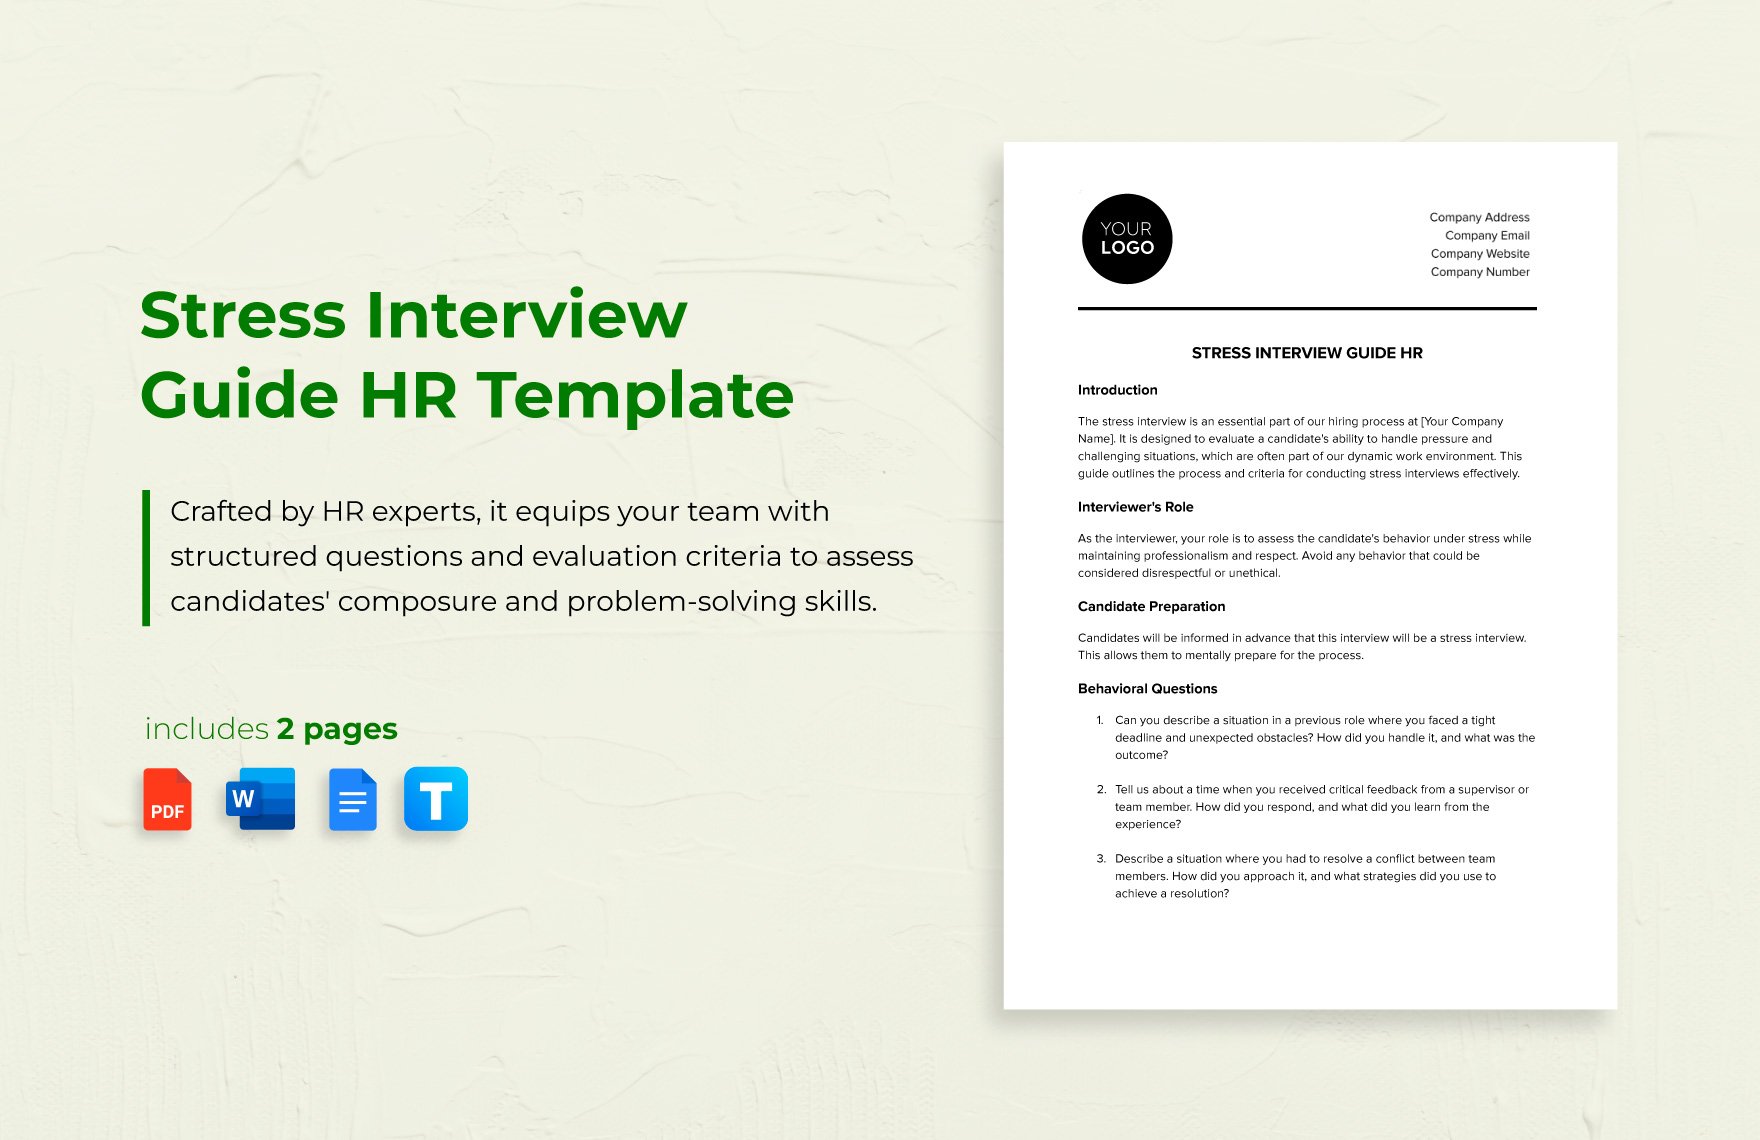 Stress Interview Guide HR Template